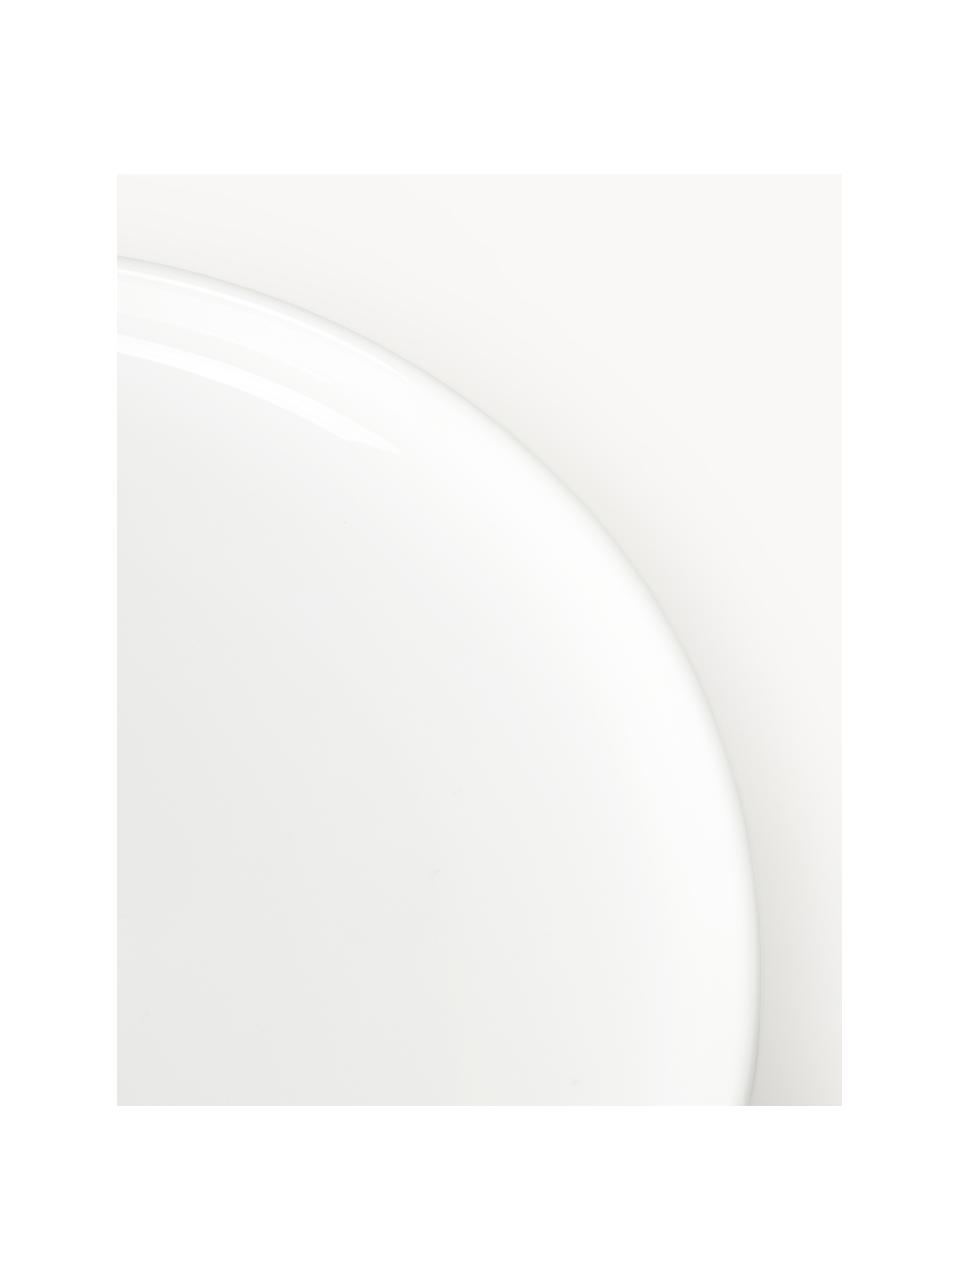 Piatti da dessert in porcellana Nessa 4 pz, Porcellana a pasta dura di alta qualità smaltata, Bianco latte lucido, Ø 19 cm